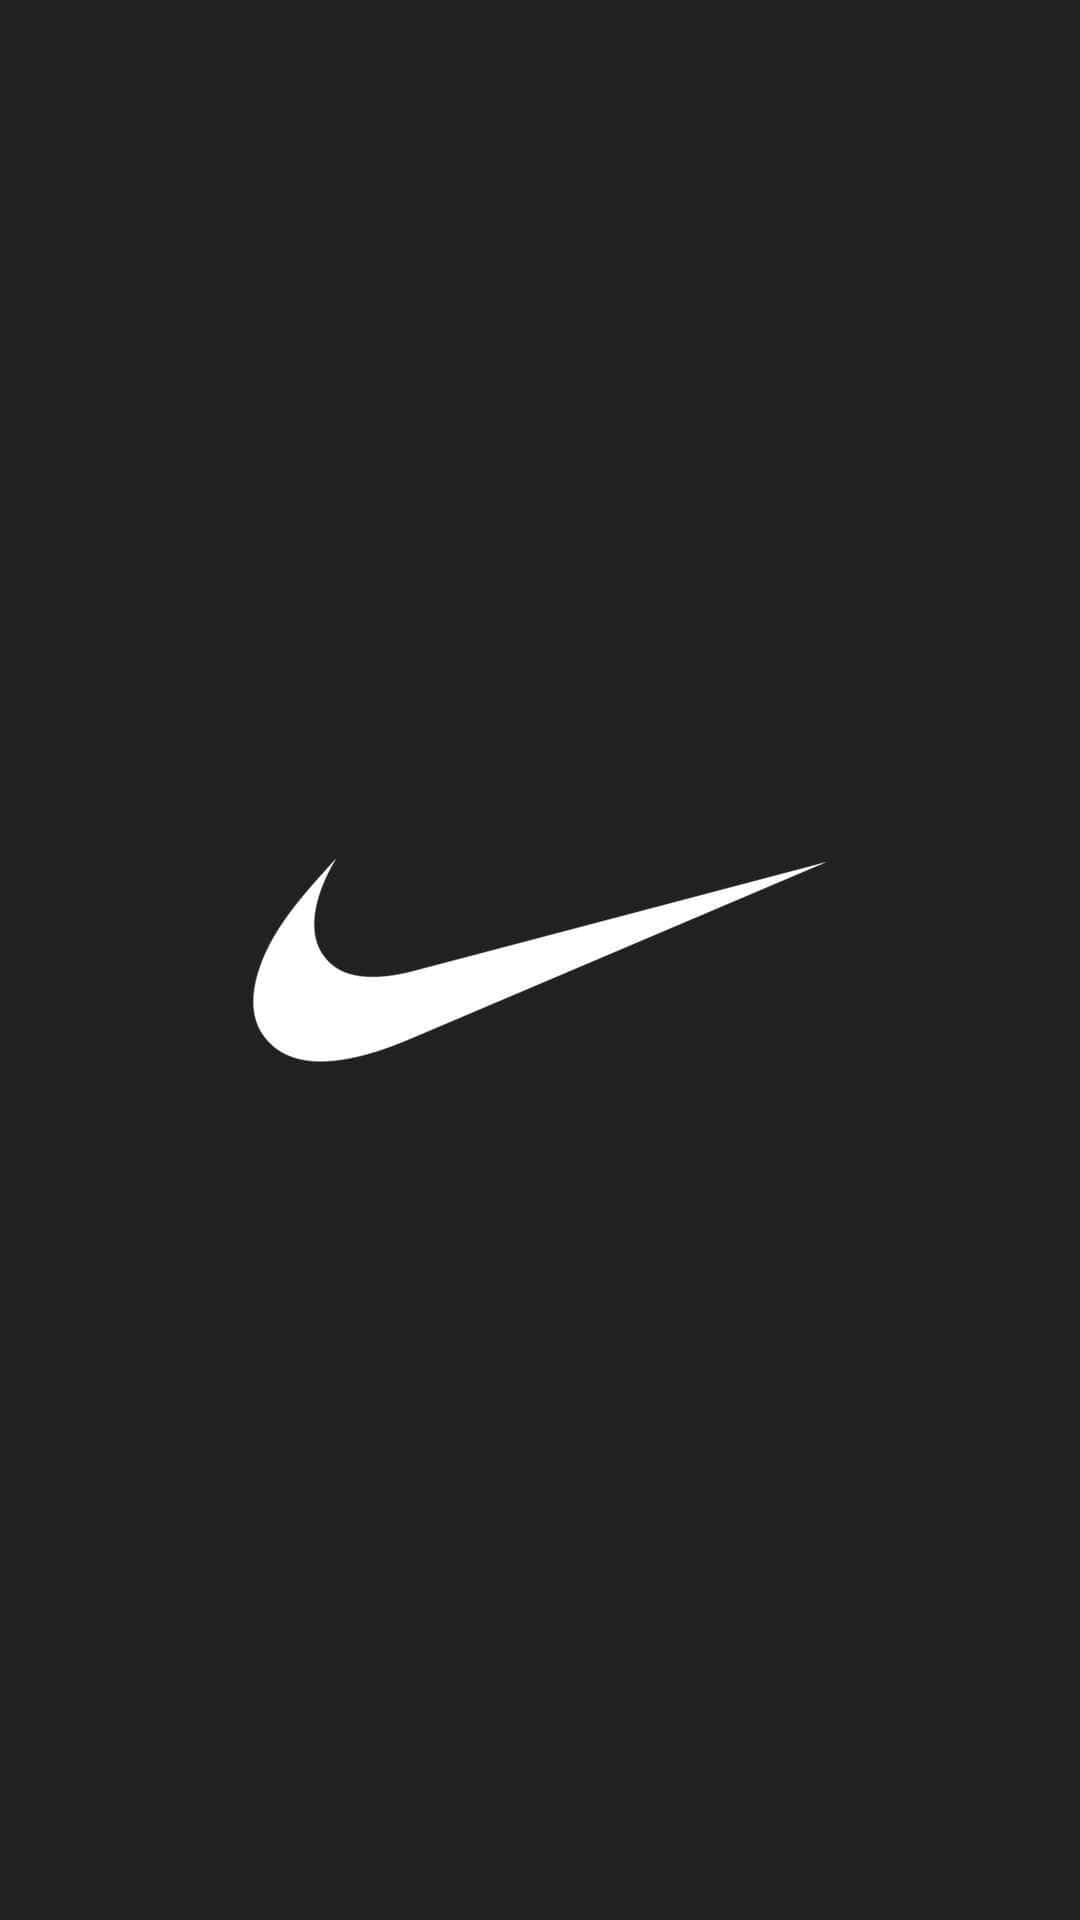 Nike-logoet 1080 X 1920 Wallpaper